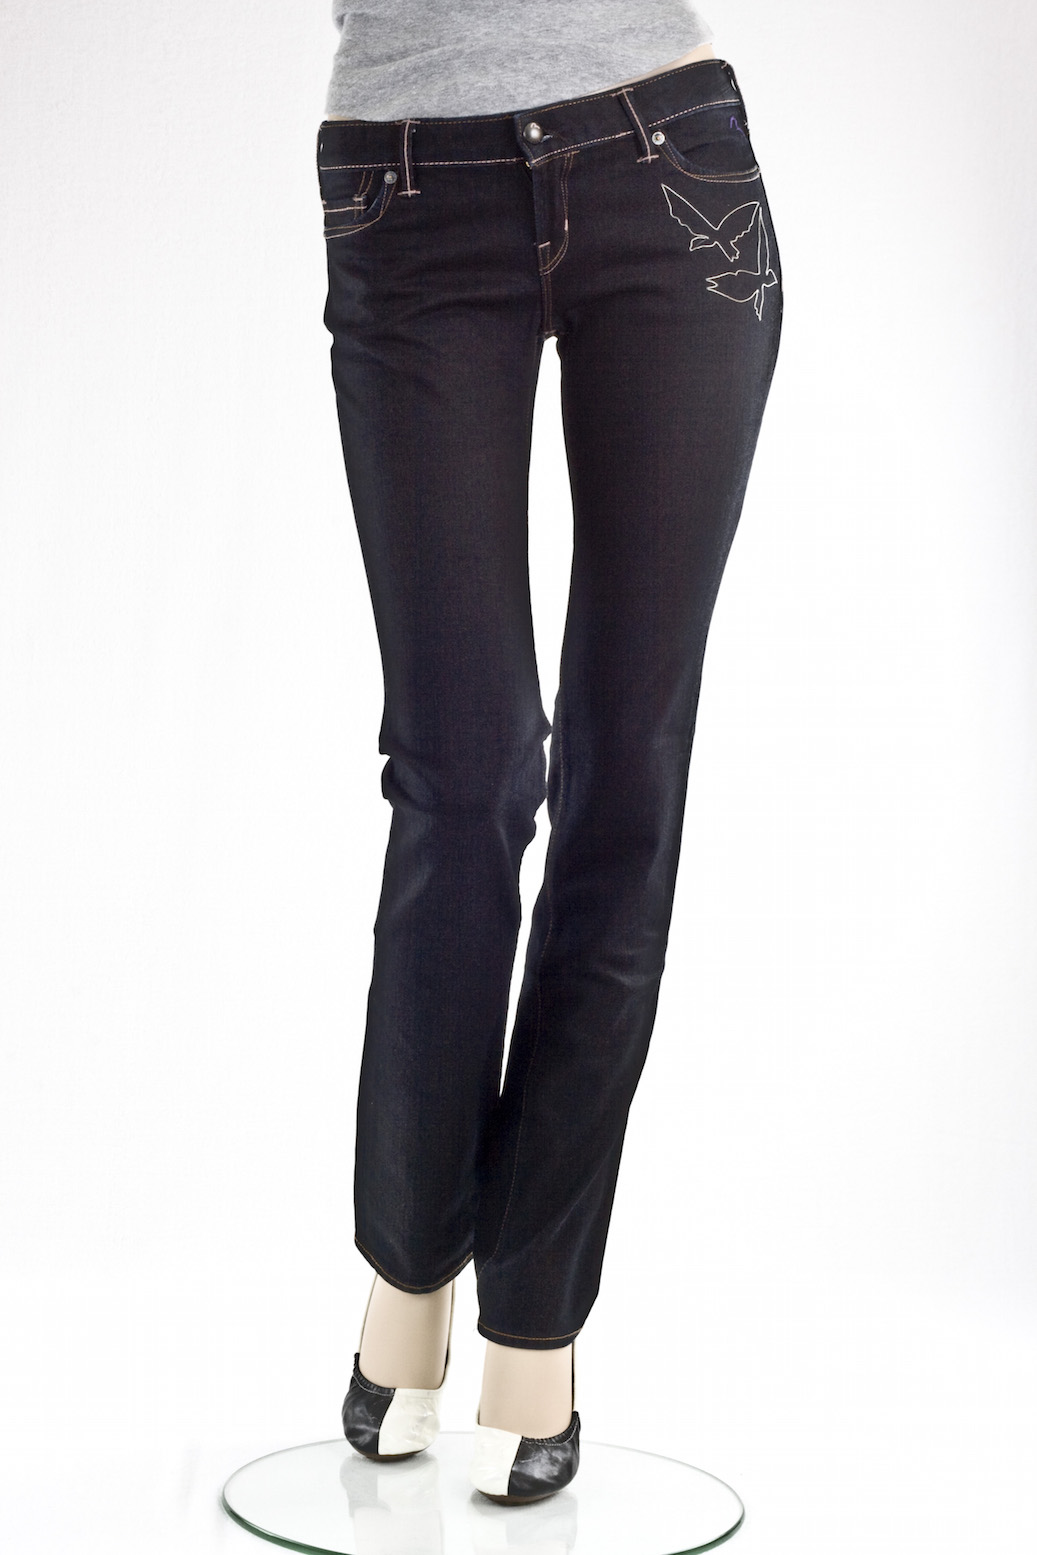 Женские джинсы Evisu "Скини" Butterfly Slim Denim интернет-магазин Fashion Jeans